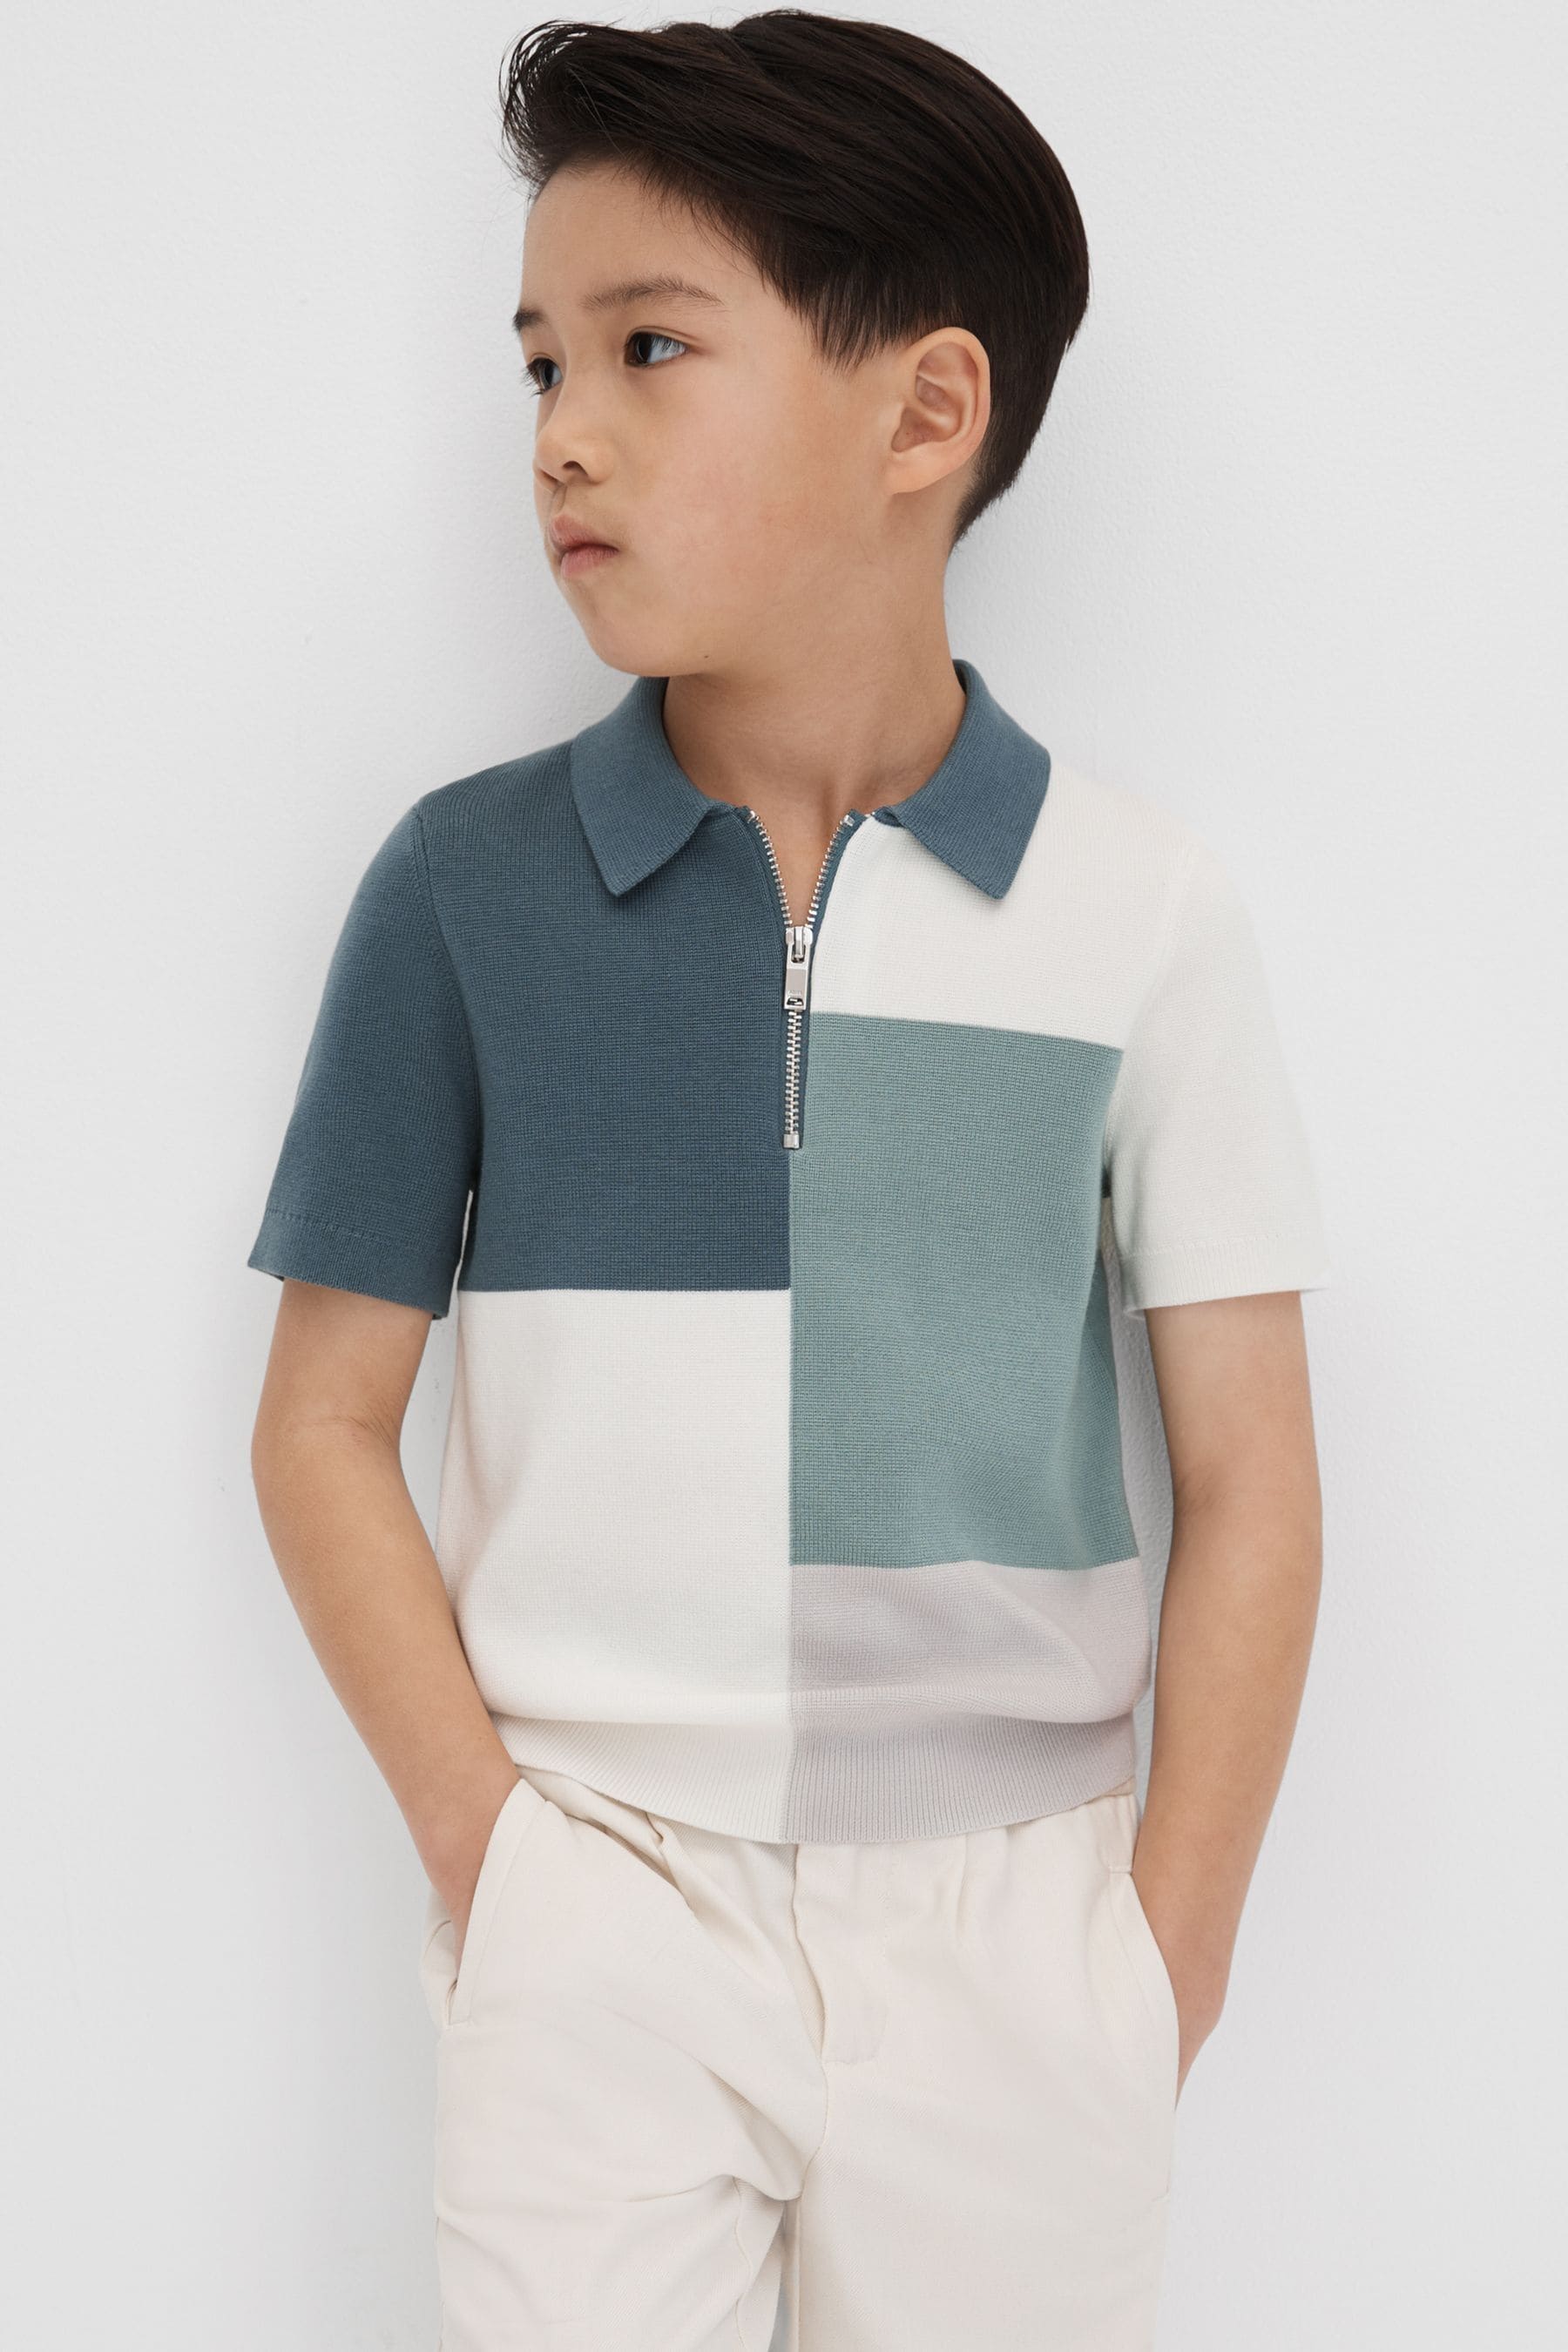 Reiss Kids' Delta - Sage Junior Colourblock Half-zip Polo Shirt, Age 8-9 Years